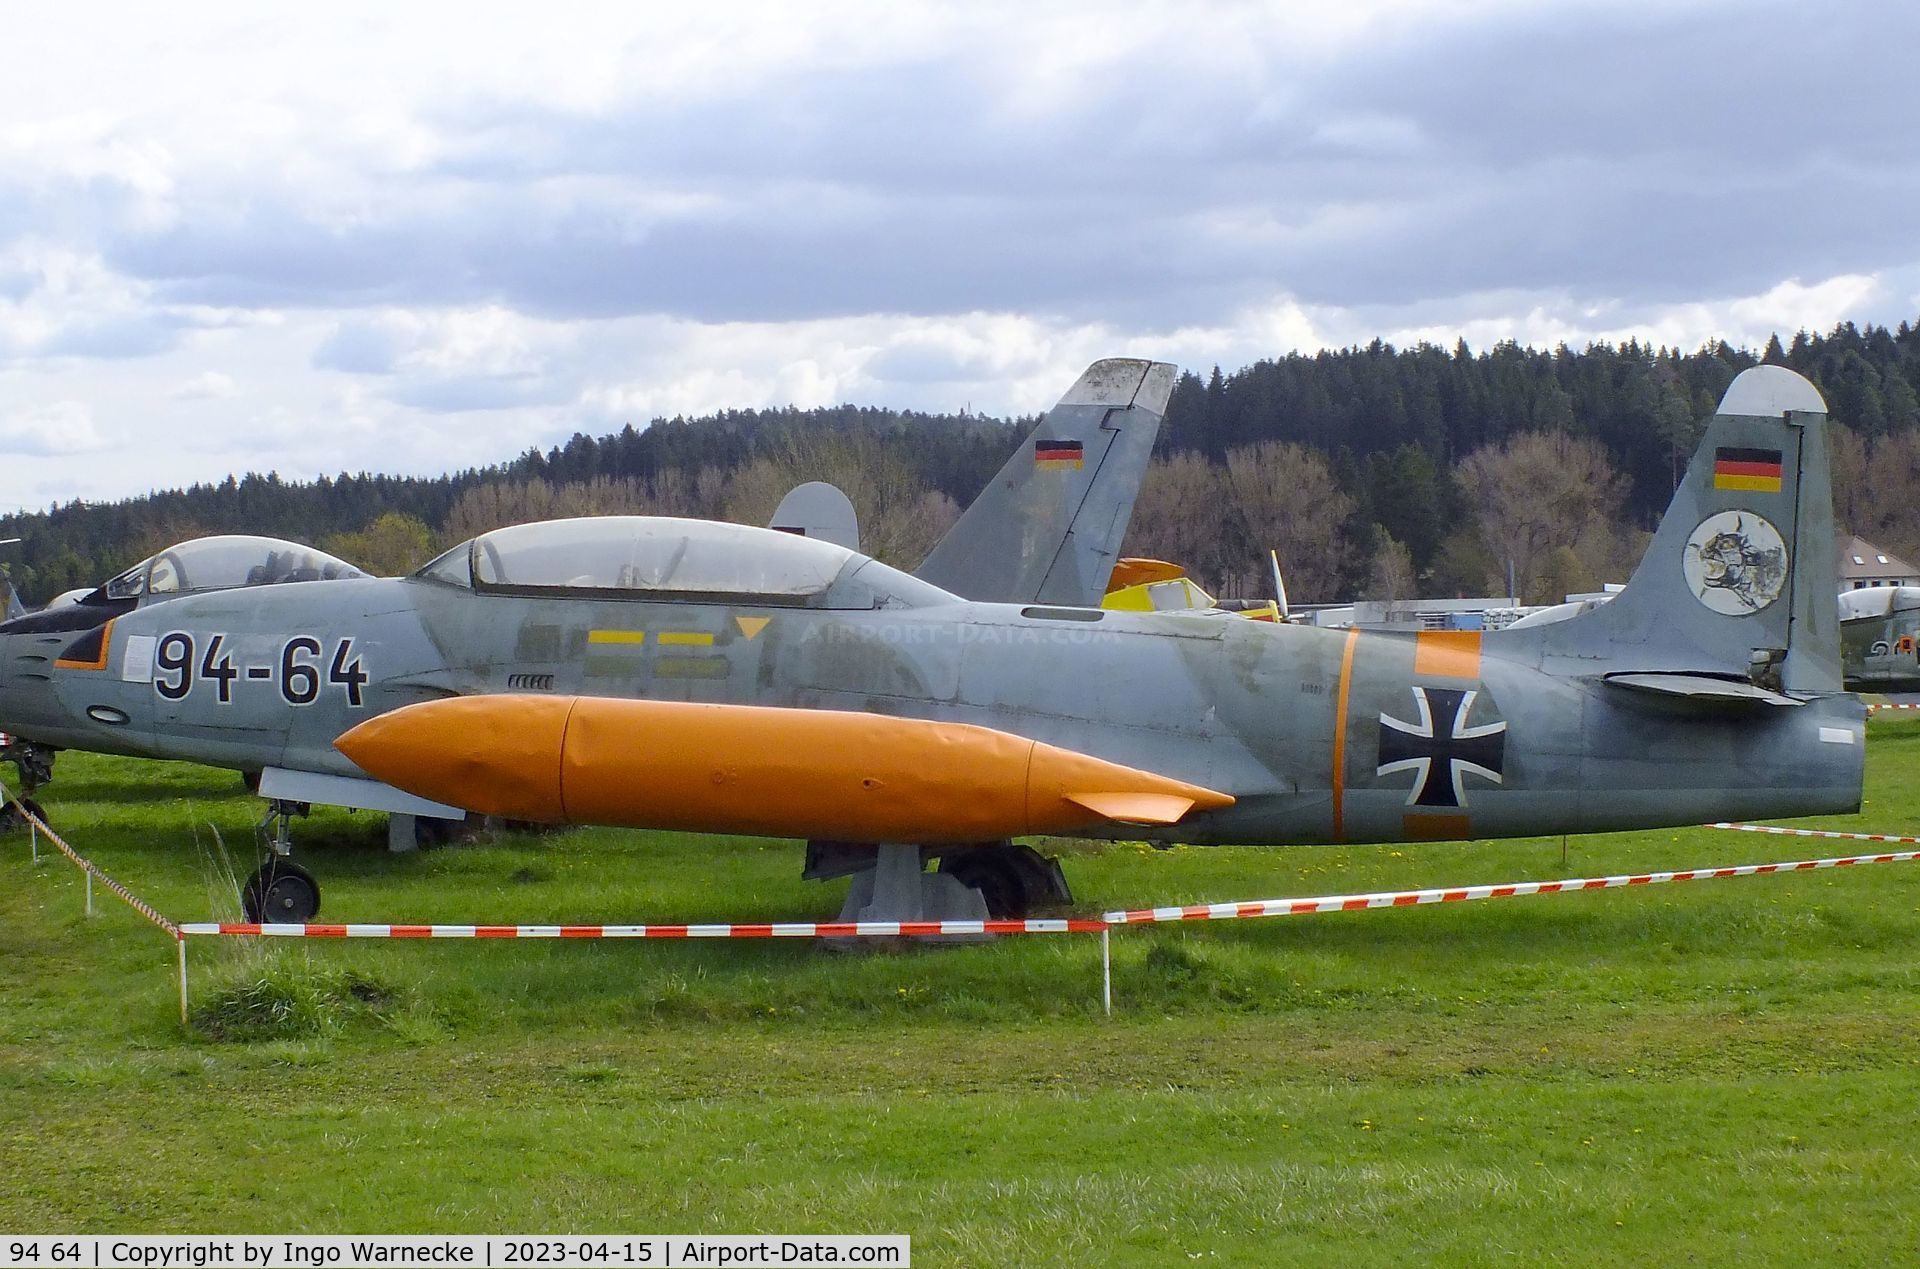 94 64, Lockheed T-33A Shooting Star C/N 580-9152, Lockheed T-33A at the Internationales Luftfahrtmuseum, Schwenningen